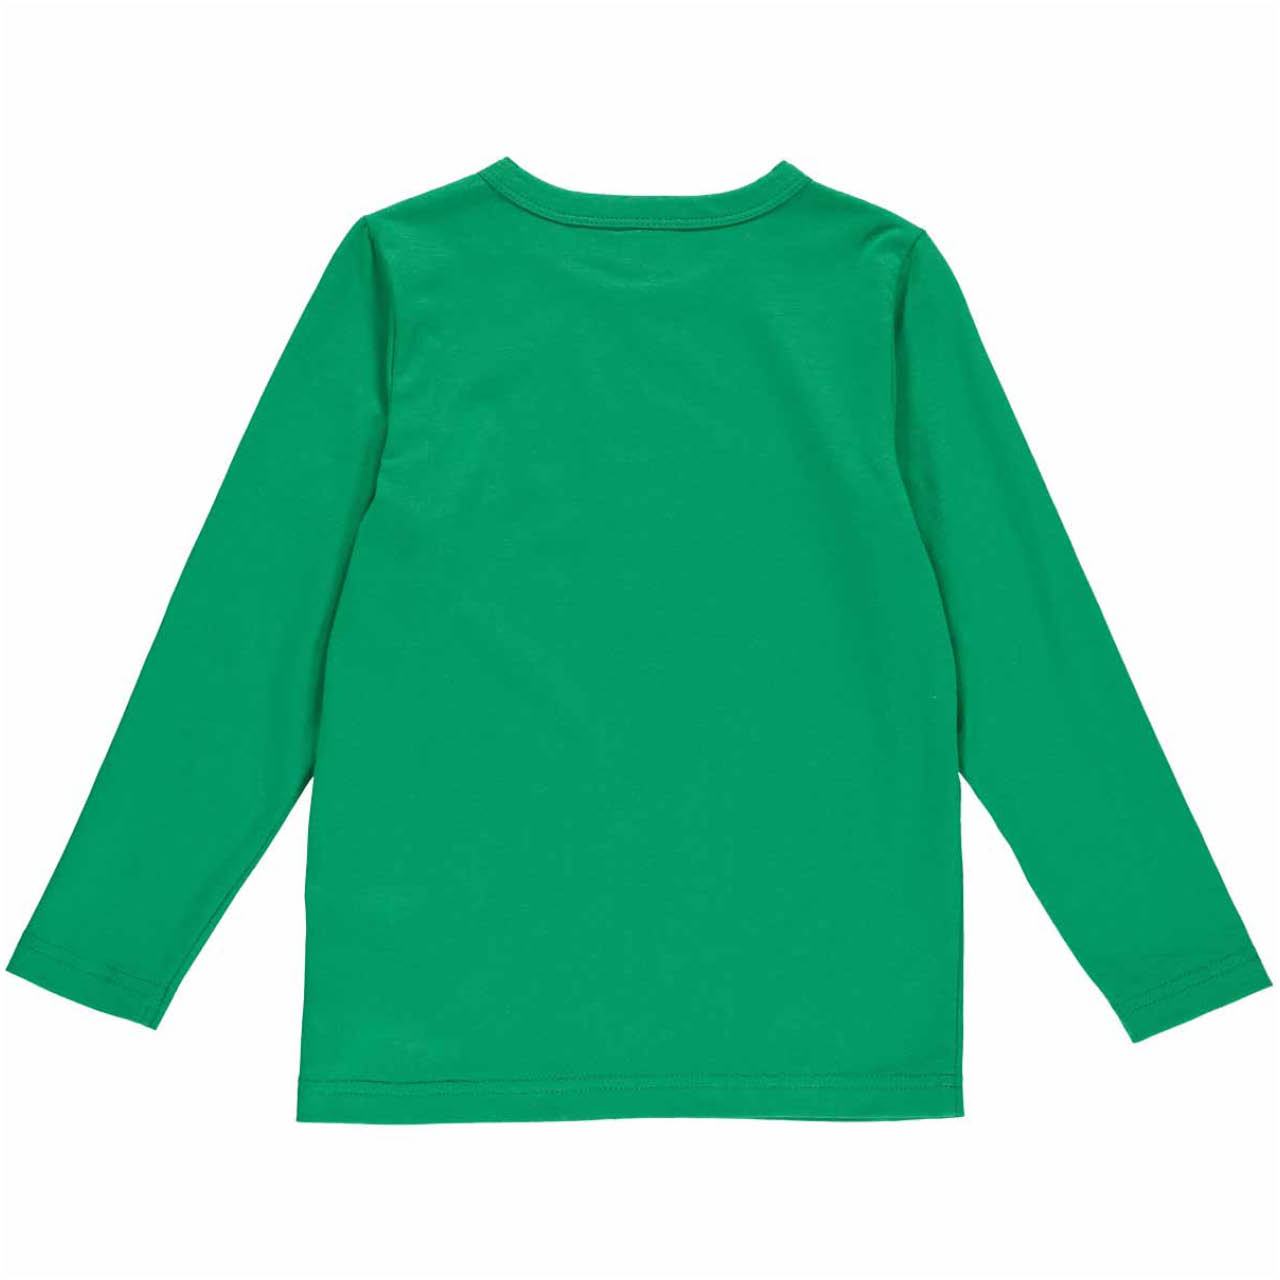 Dehnbares Basic Langarmshirt sattes grün